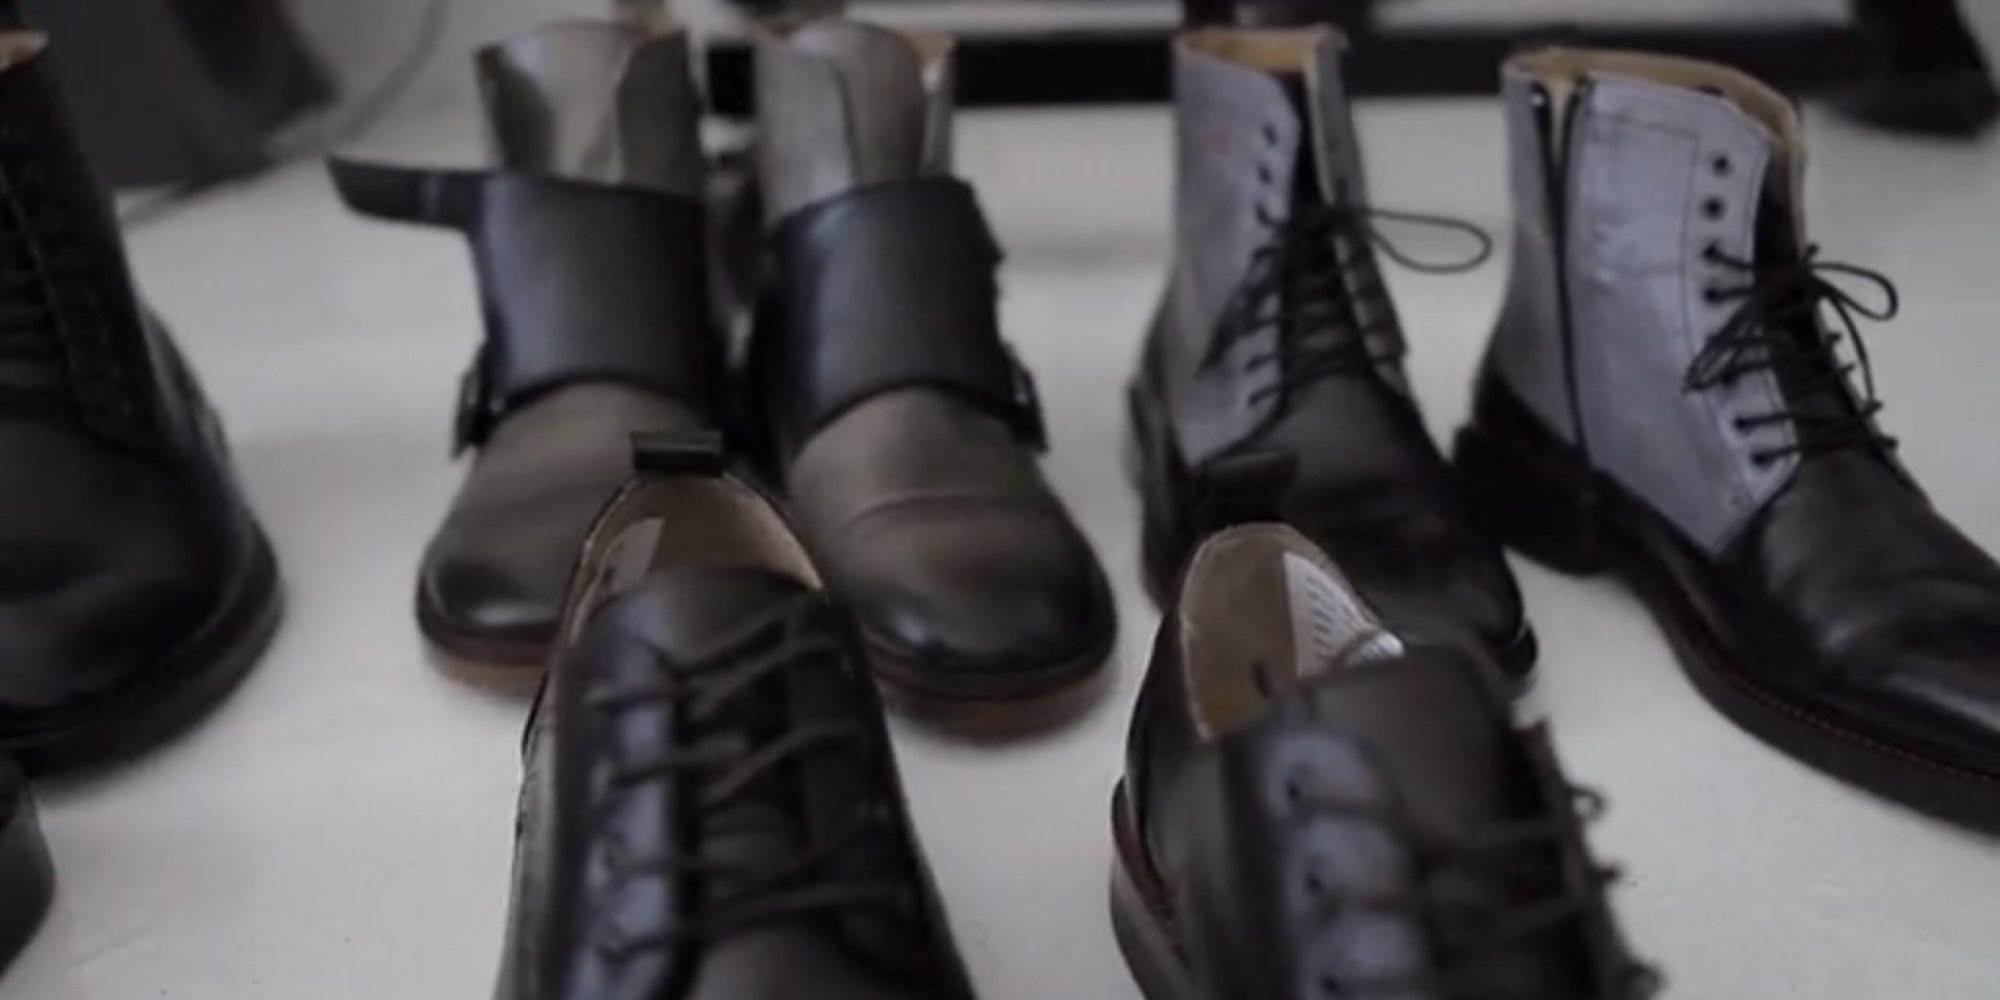 NiK Kacy, Luxury Gender-Neutral Footwear Brand, Engaged In Kickstarter ...